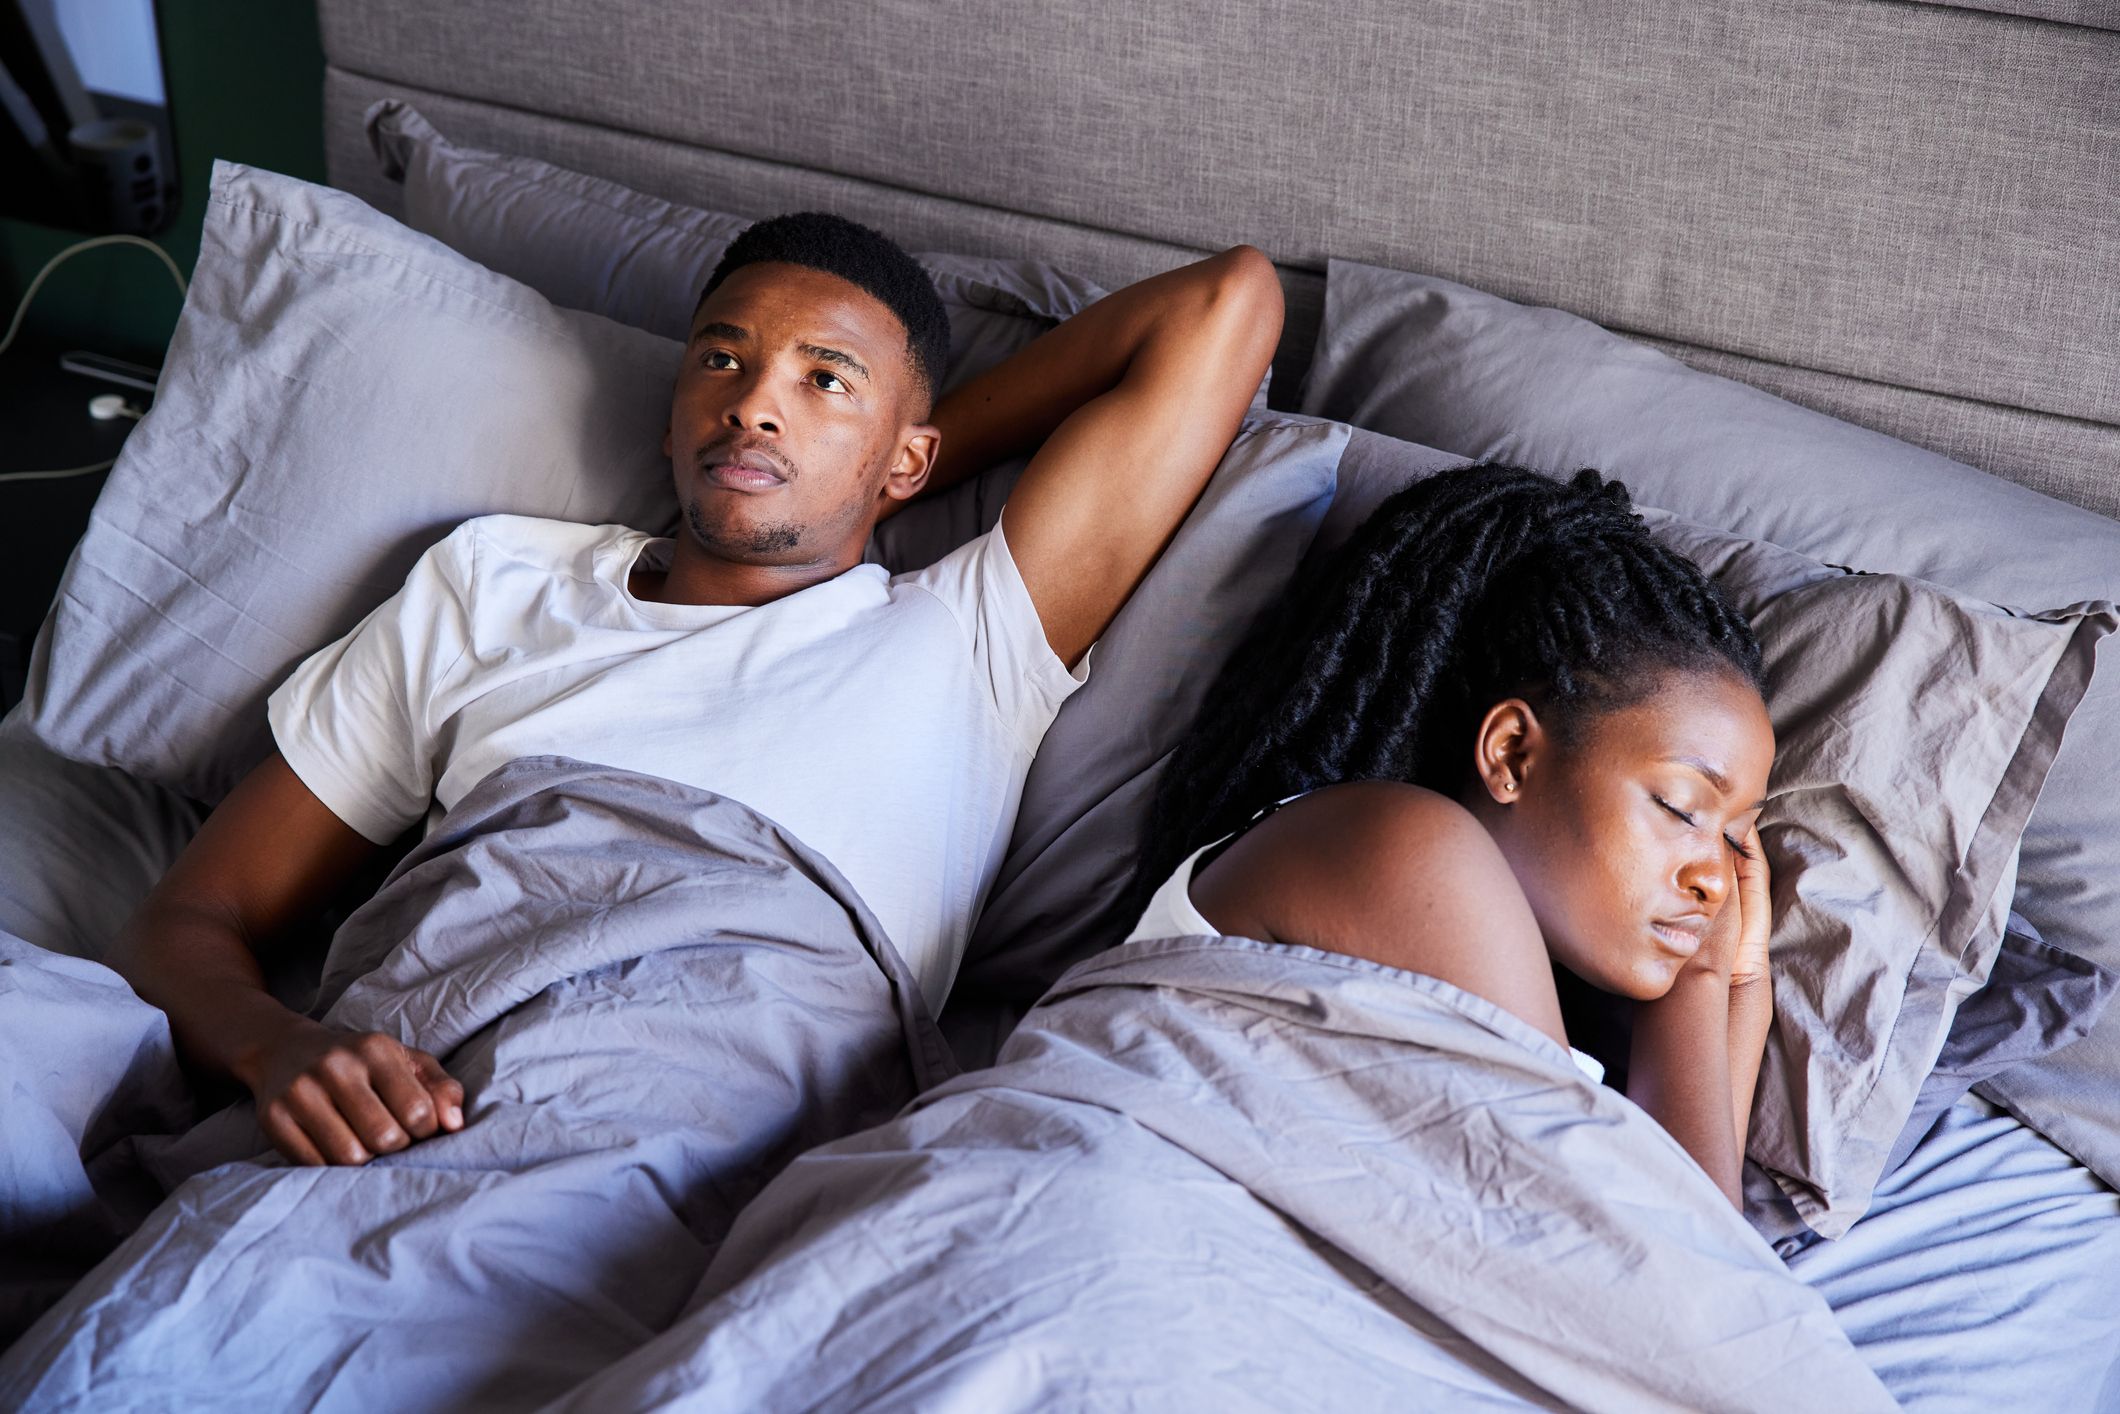 Bedroom dilemma: Should you go commando to sleep?